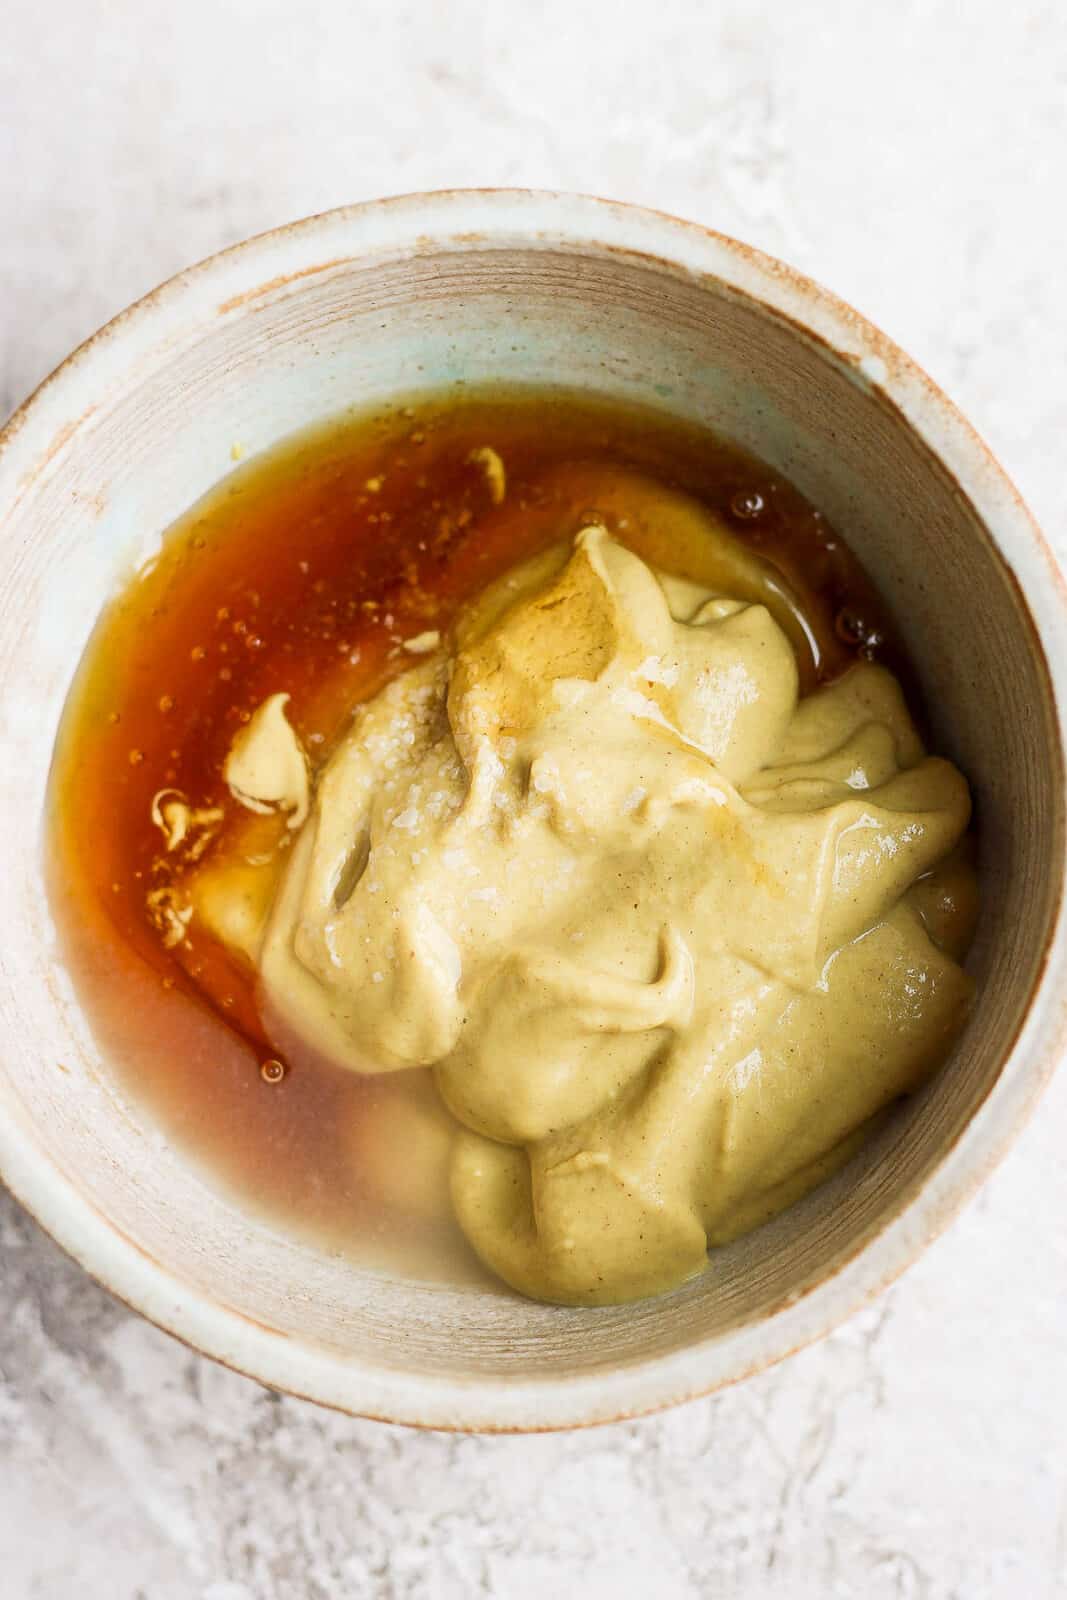 Honey mustard ingredients in a mixing bowl.